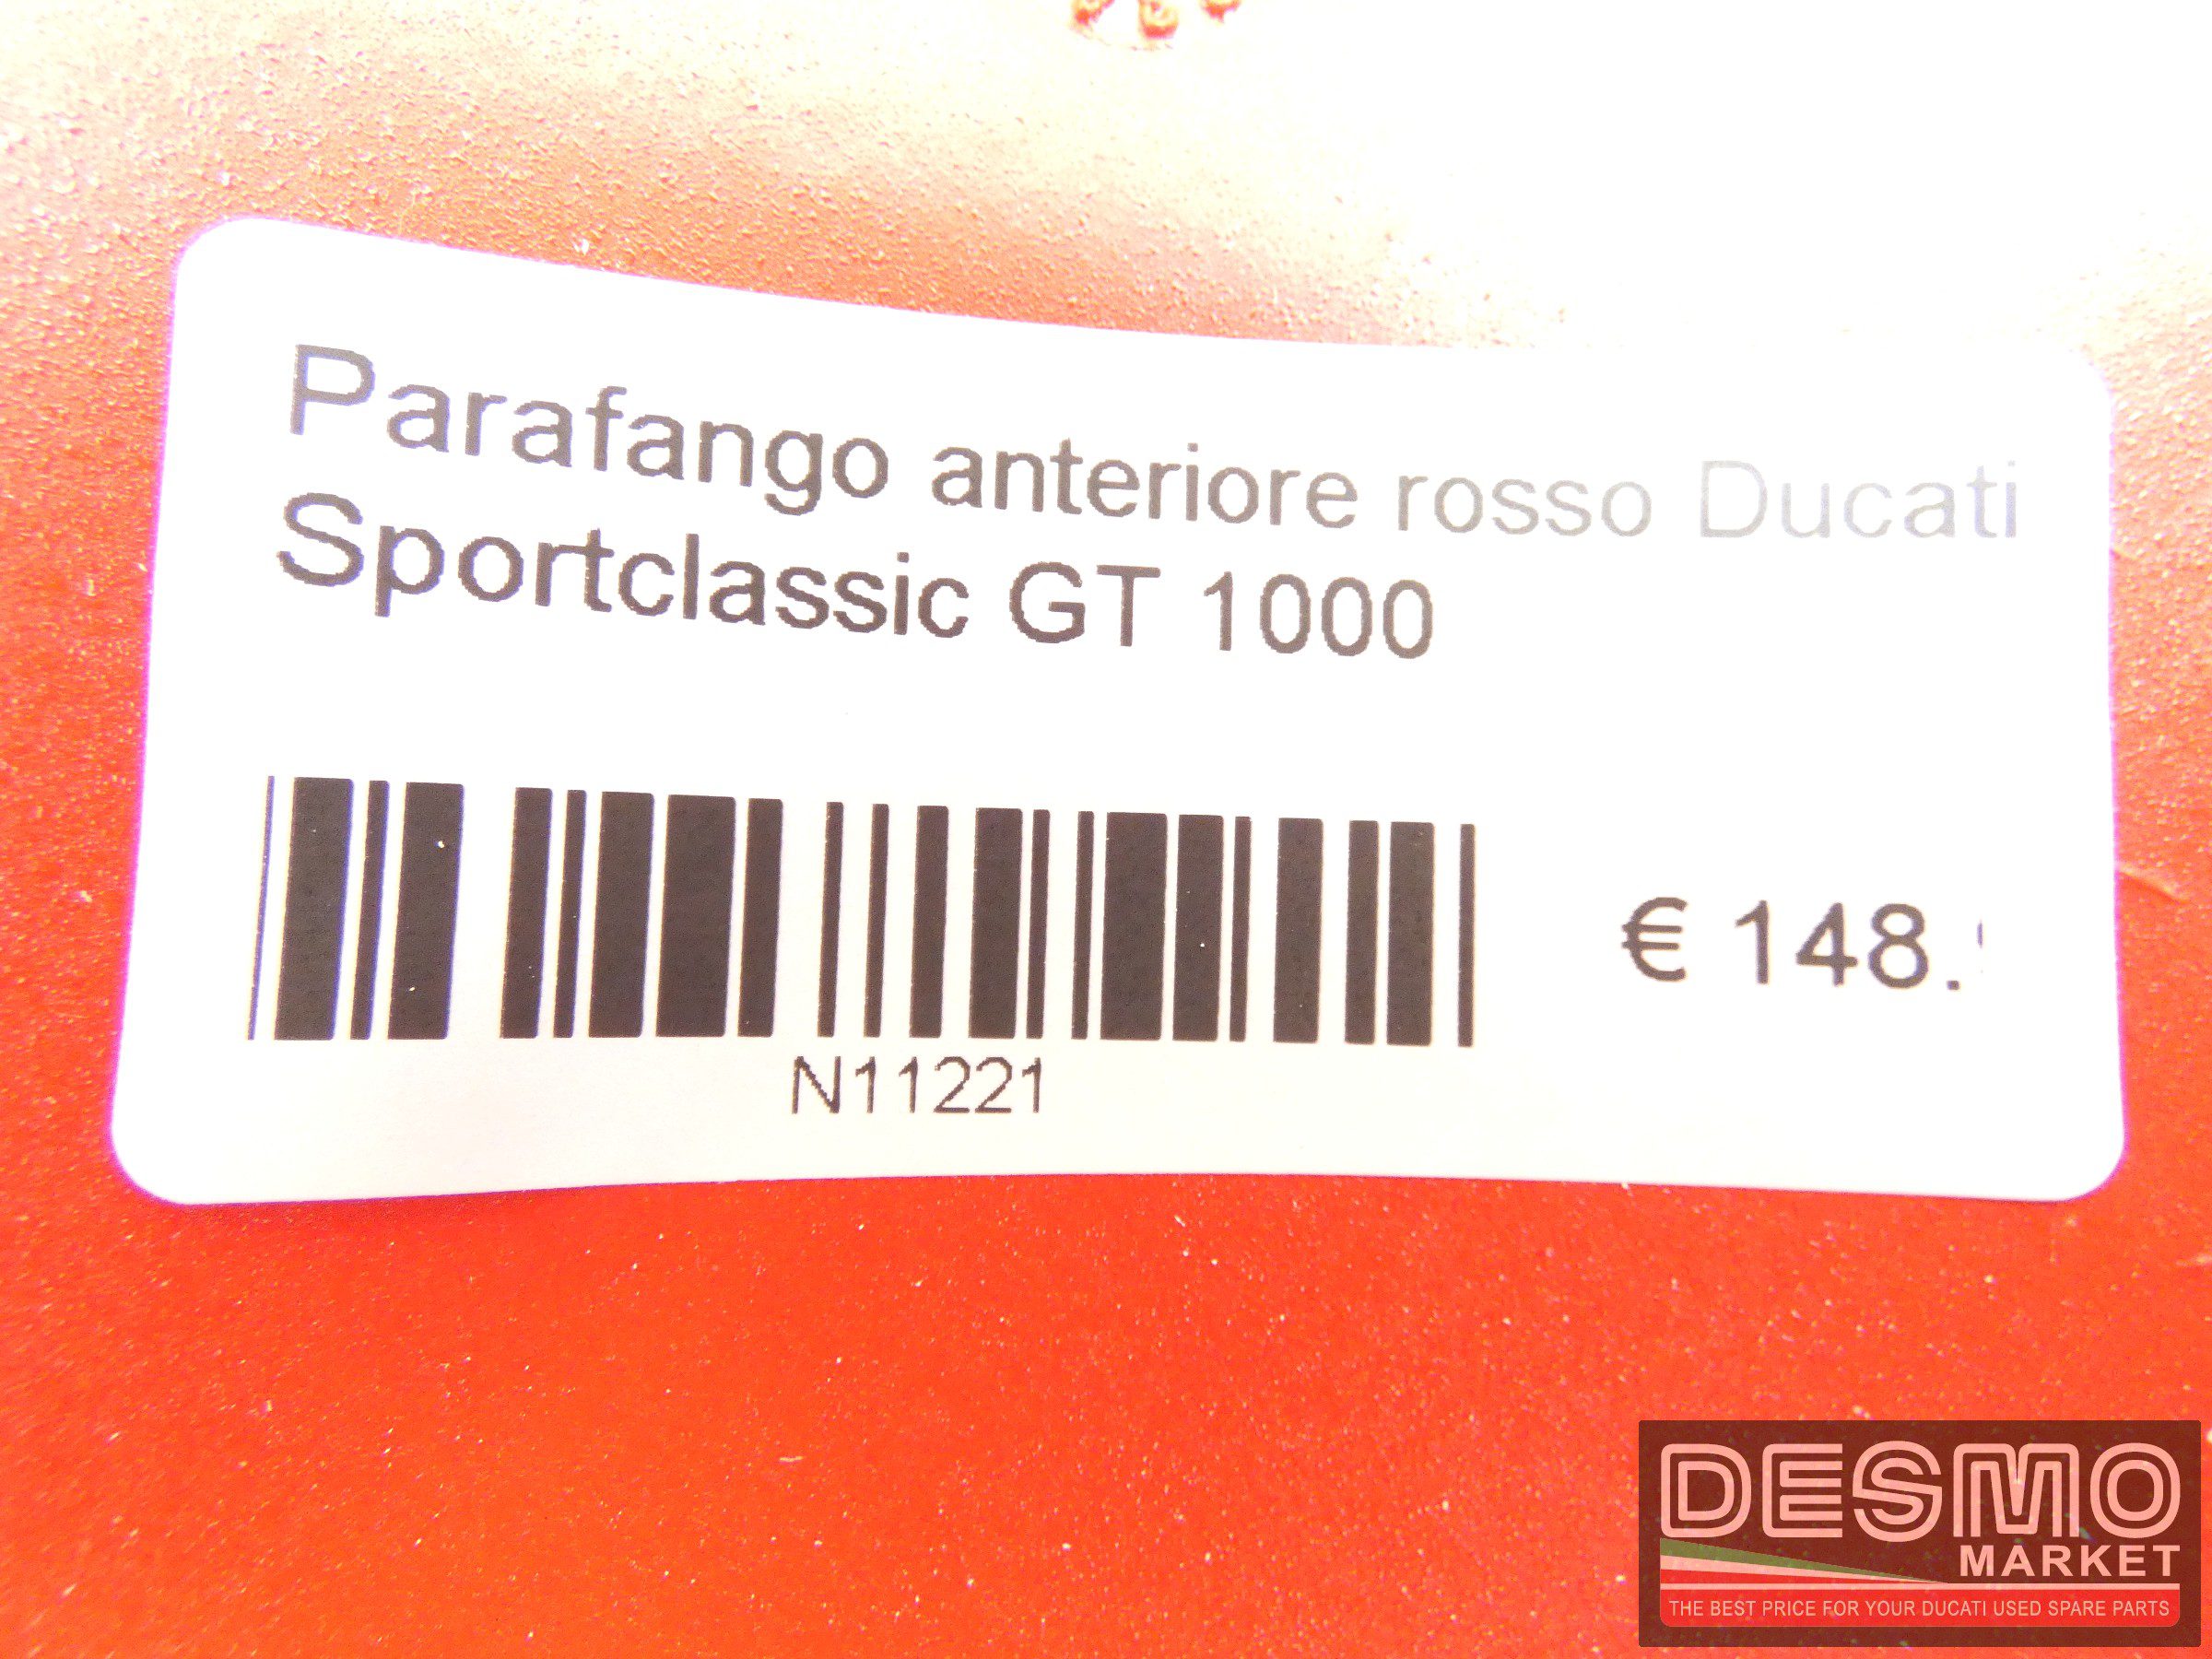 Parafango anteriore rosso Ducati Sportclassic GT 1000